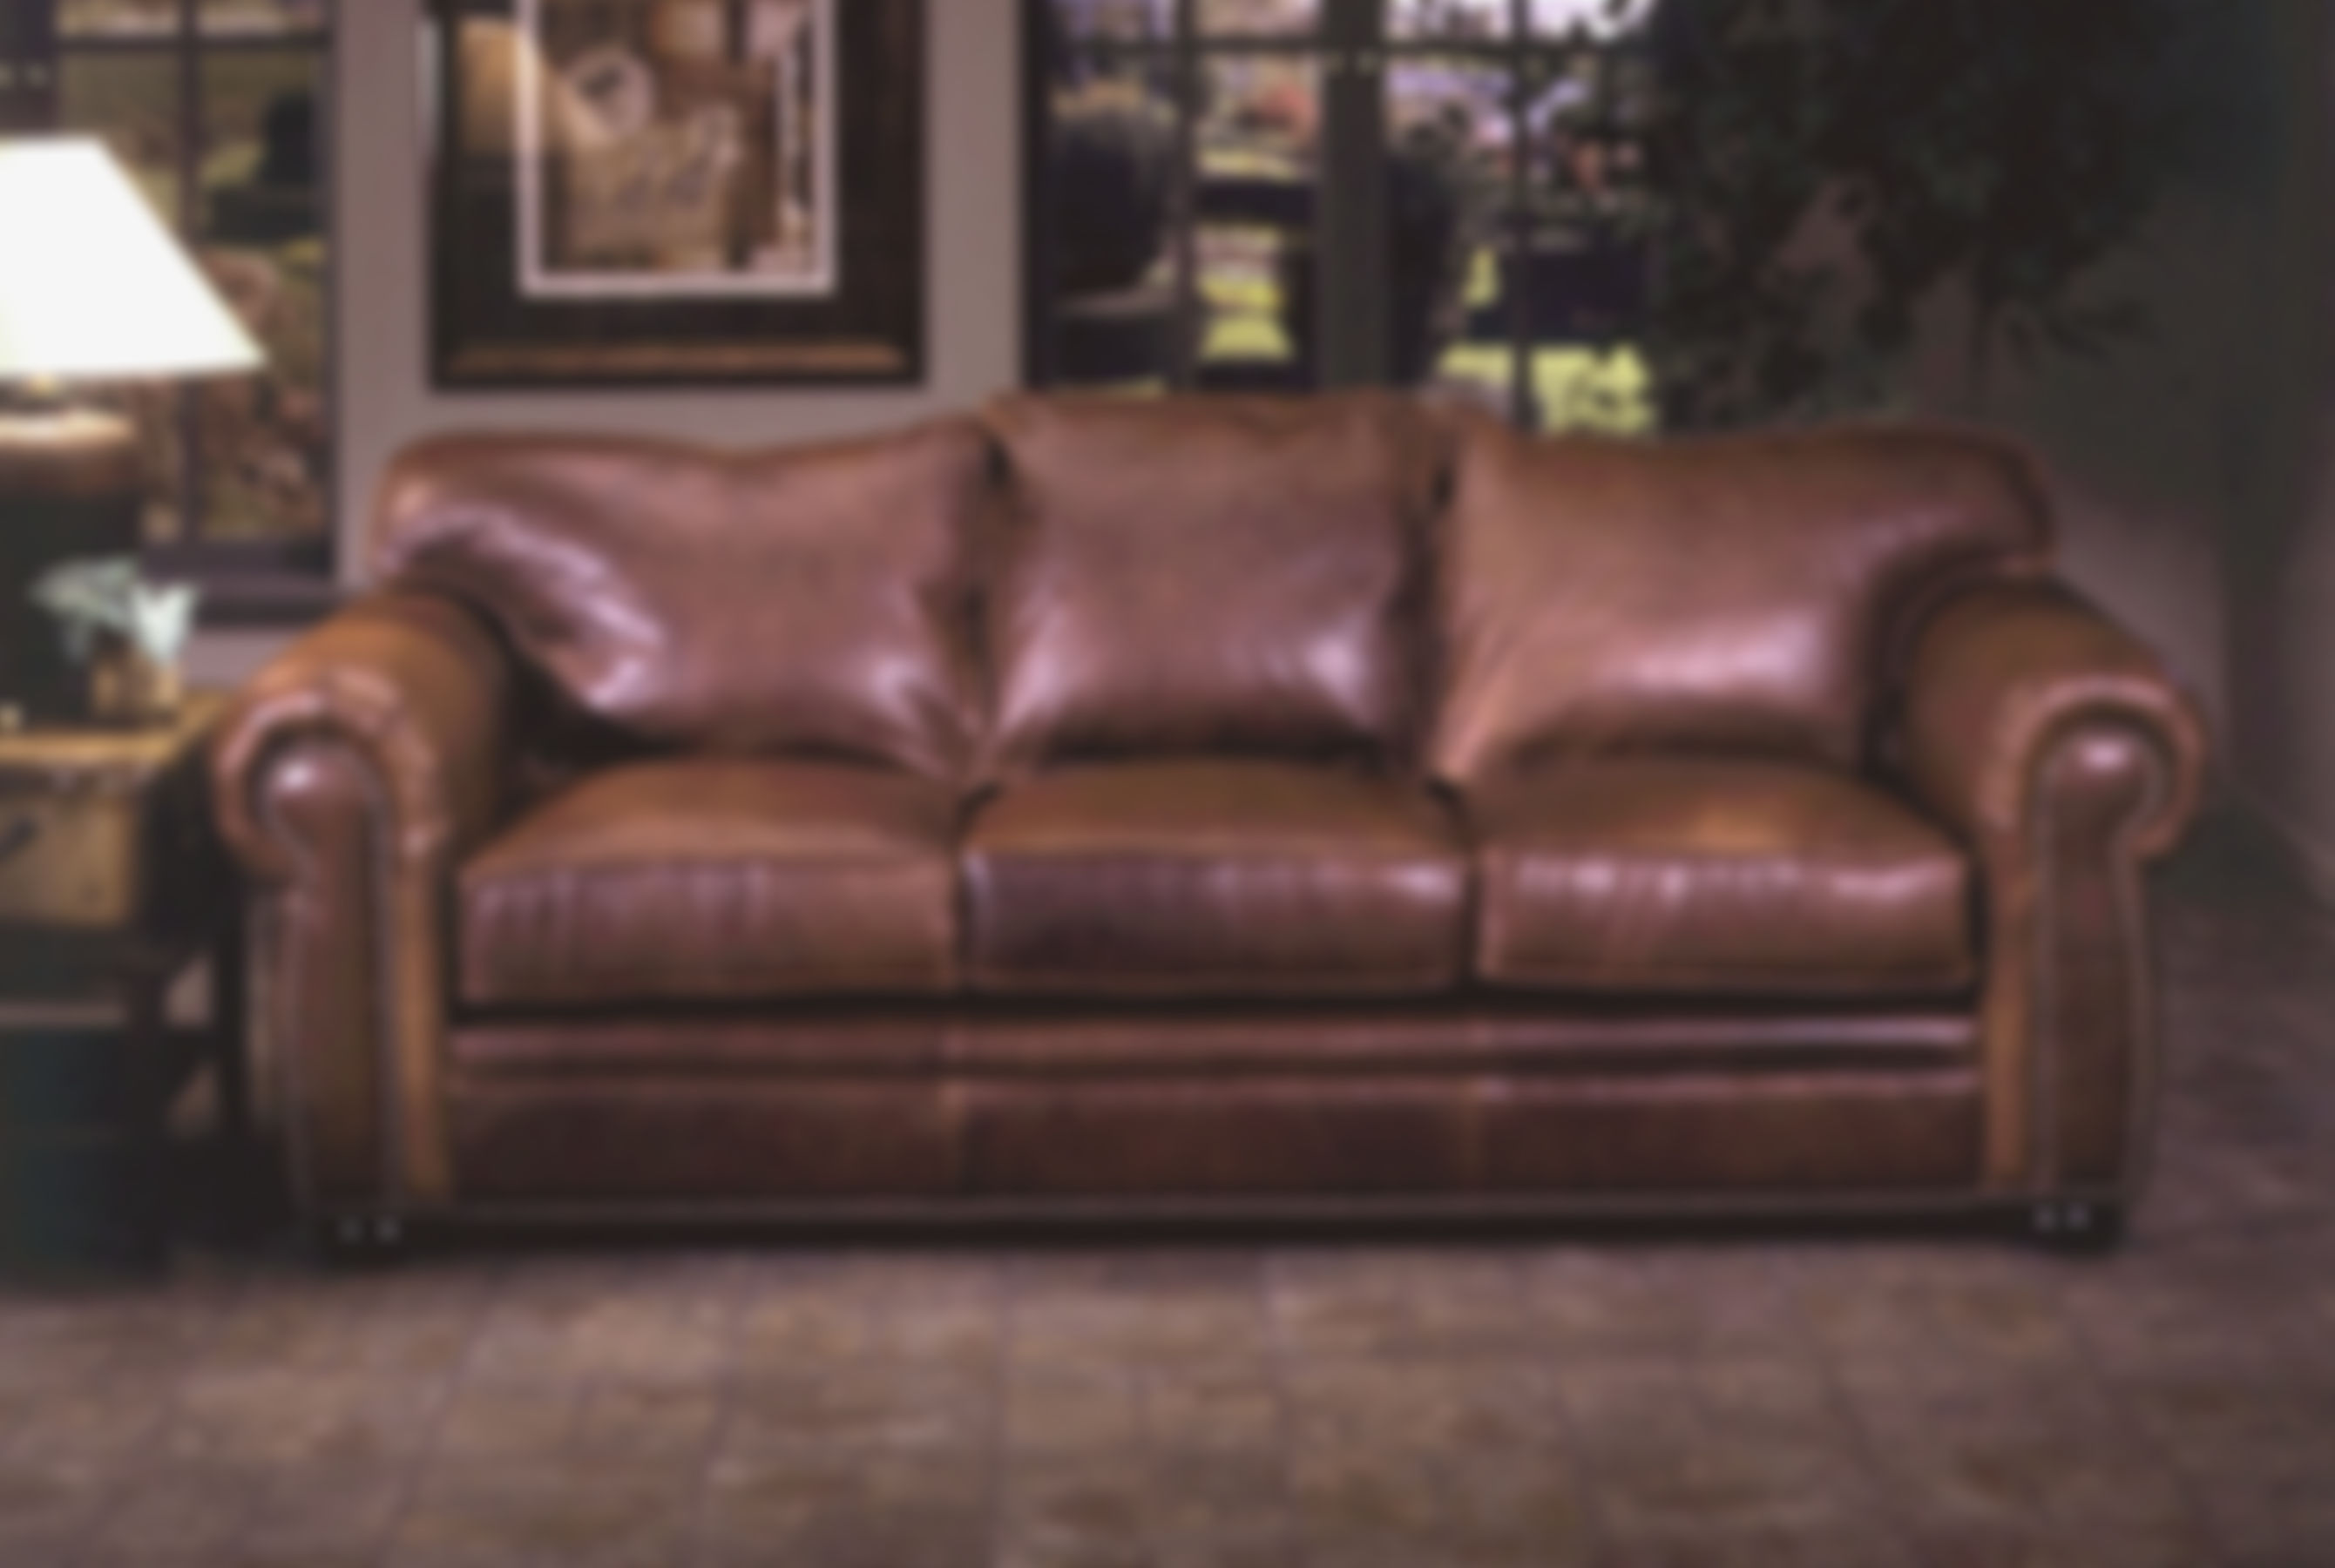 Monte Carlo 96 Or 120 Sofa All, Baja Leather Designs